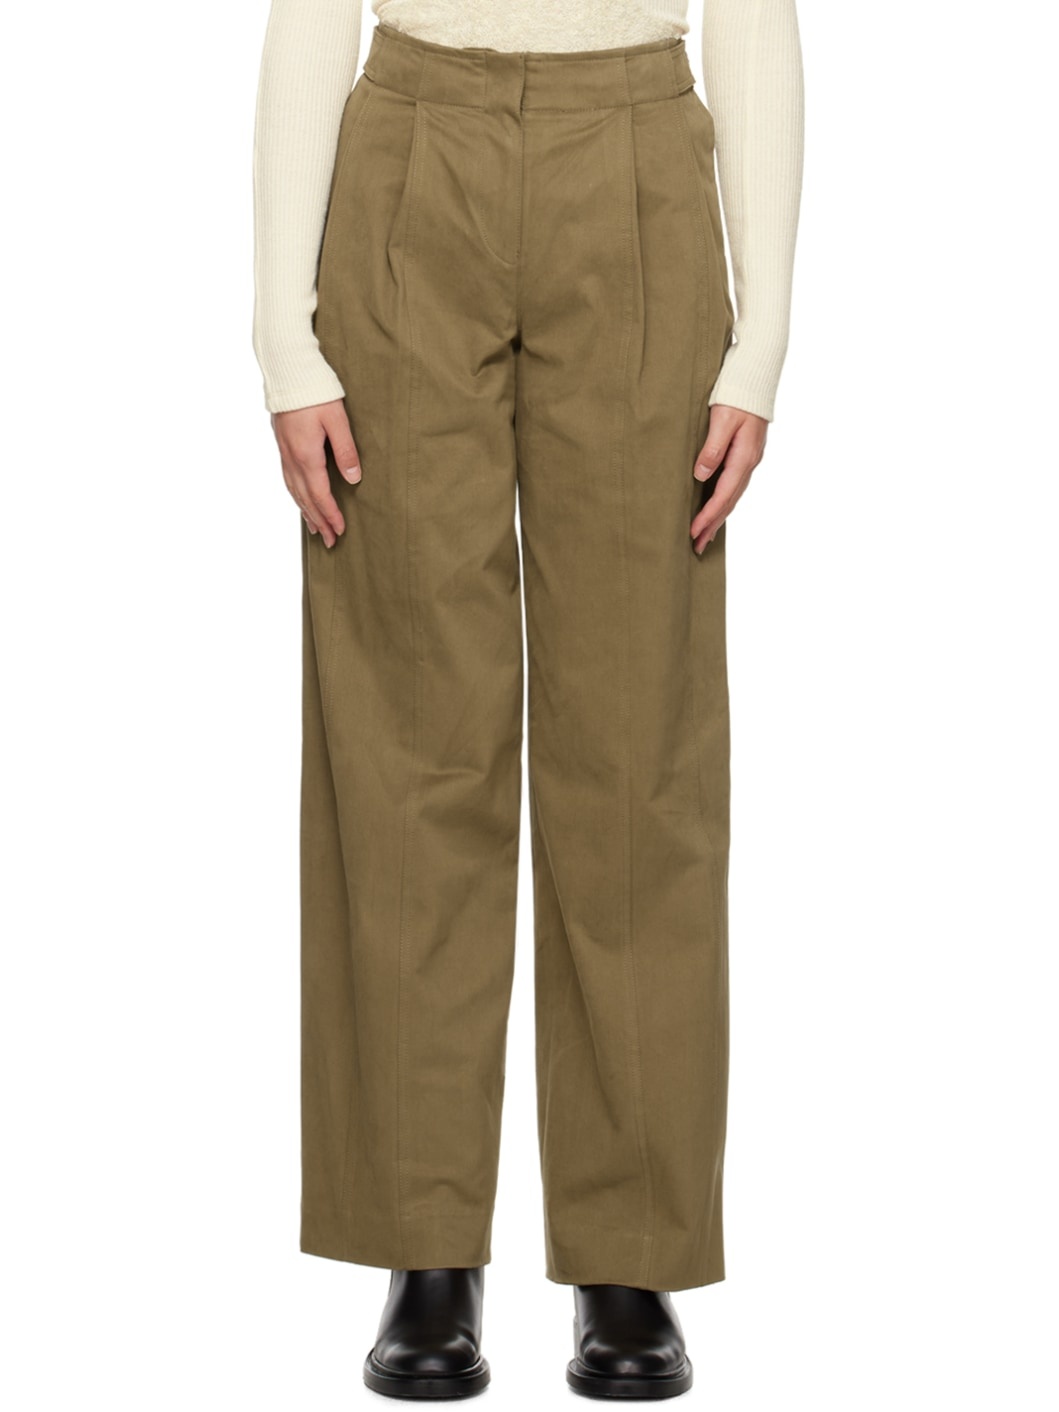 Khaki Pleated Trousers - 1